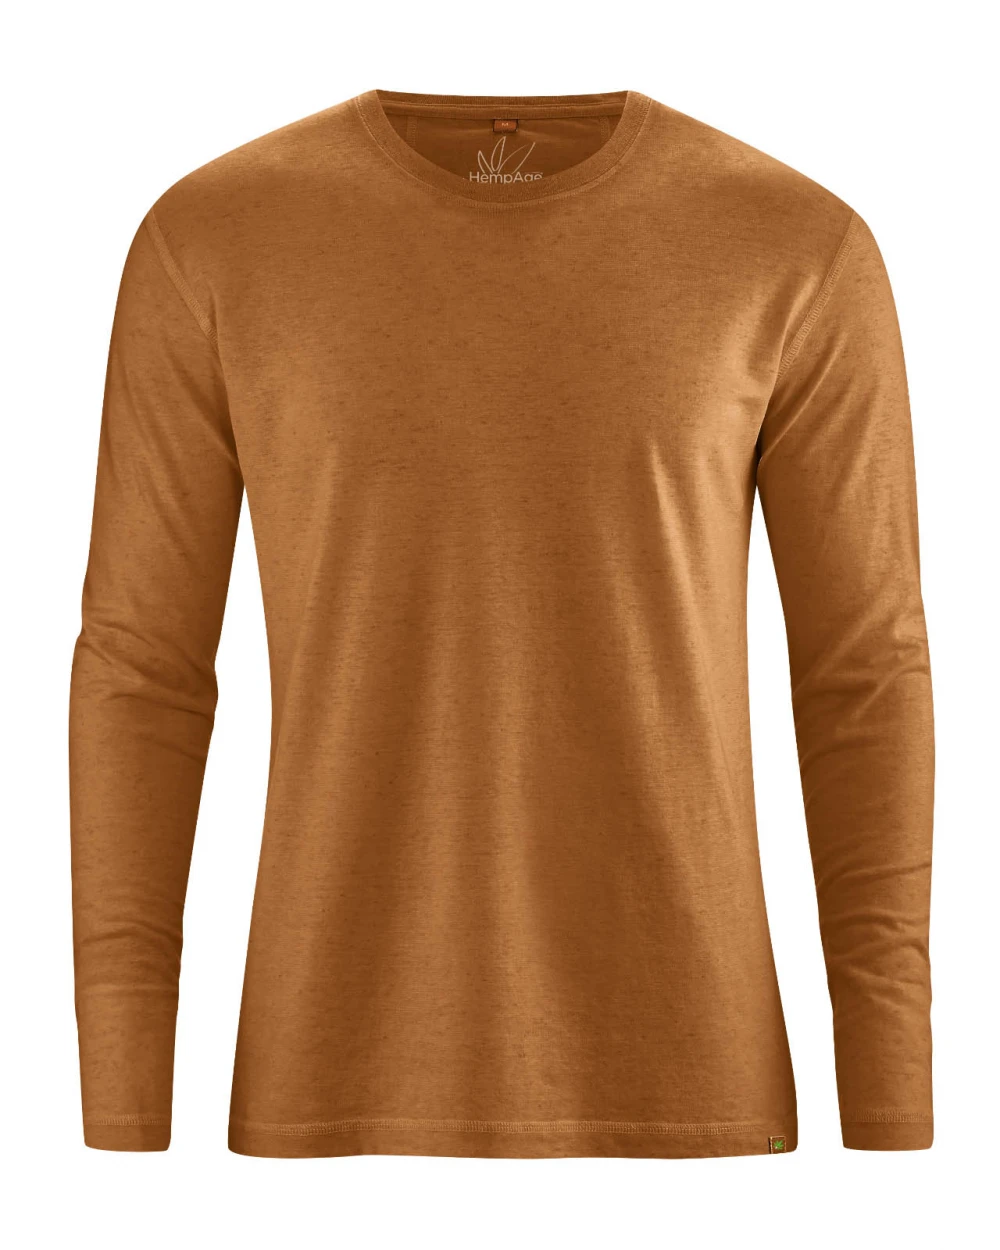 Basic long-sleeved shirt for men in hemp and organic cotton - Almond